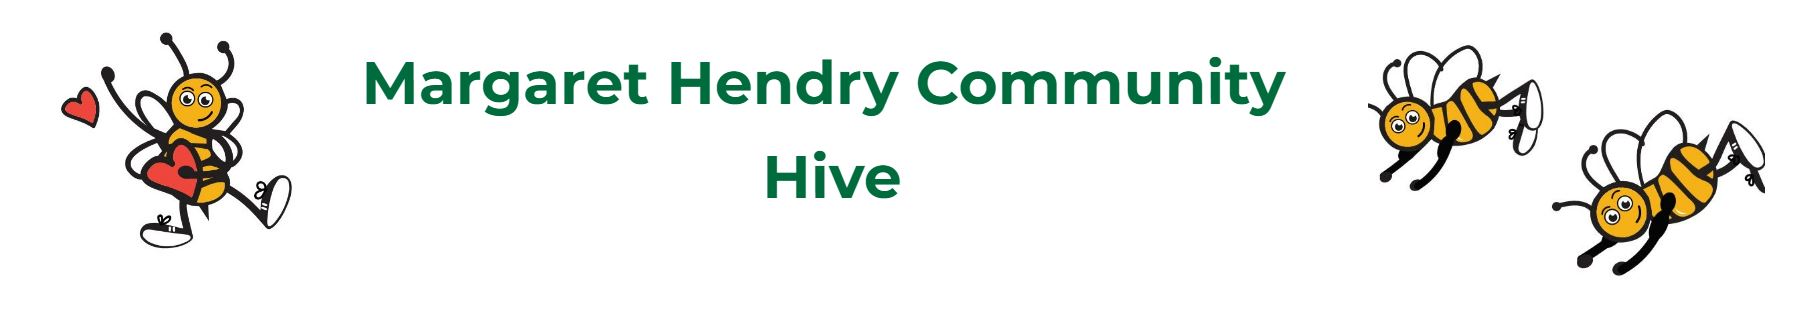 Community Hive